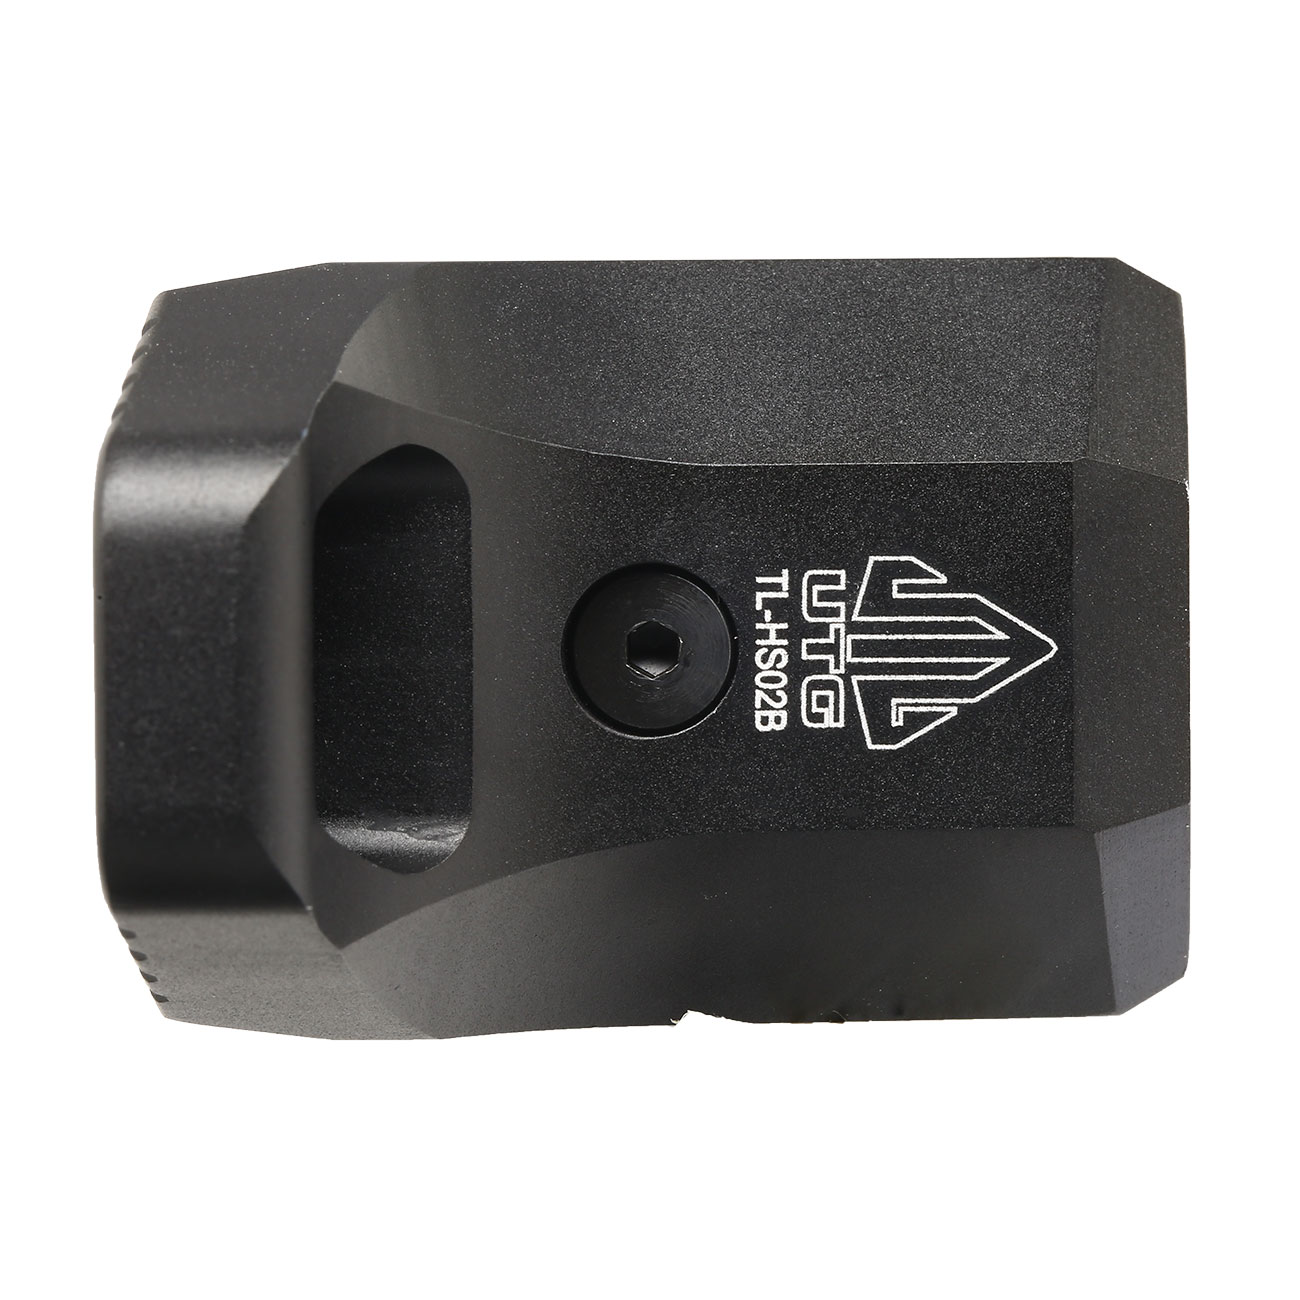 UTG KeyMod Super Slim Aluminium Handstop / Barricade Rest Kit schwarz Bild 6